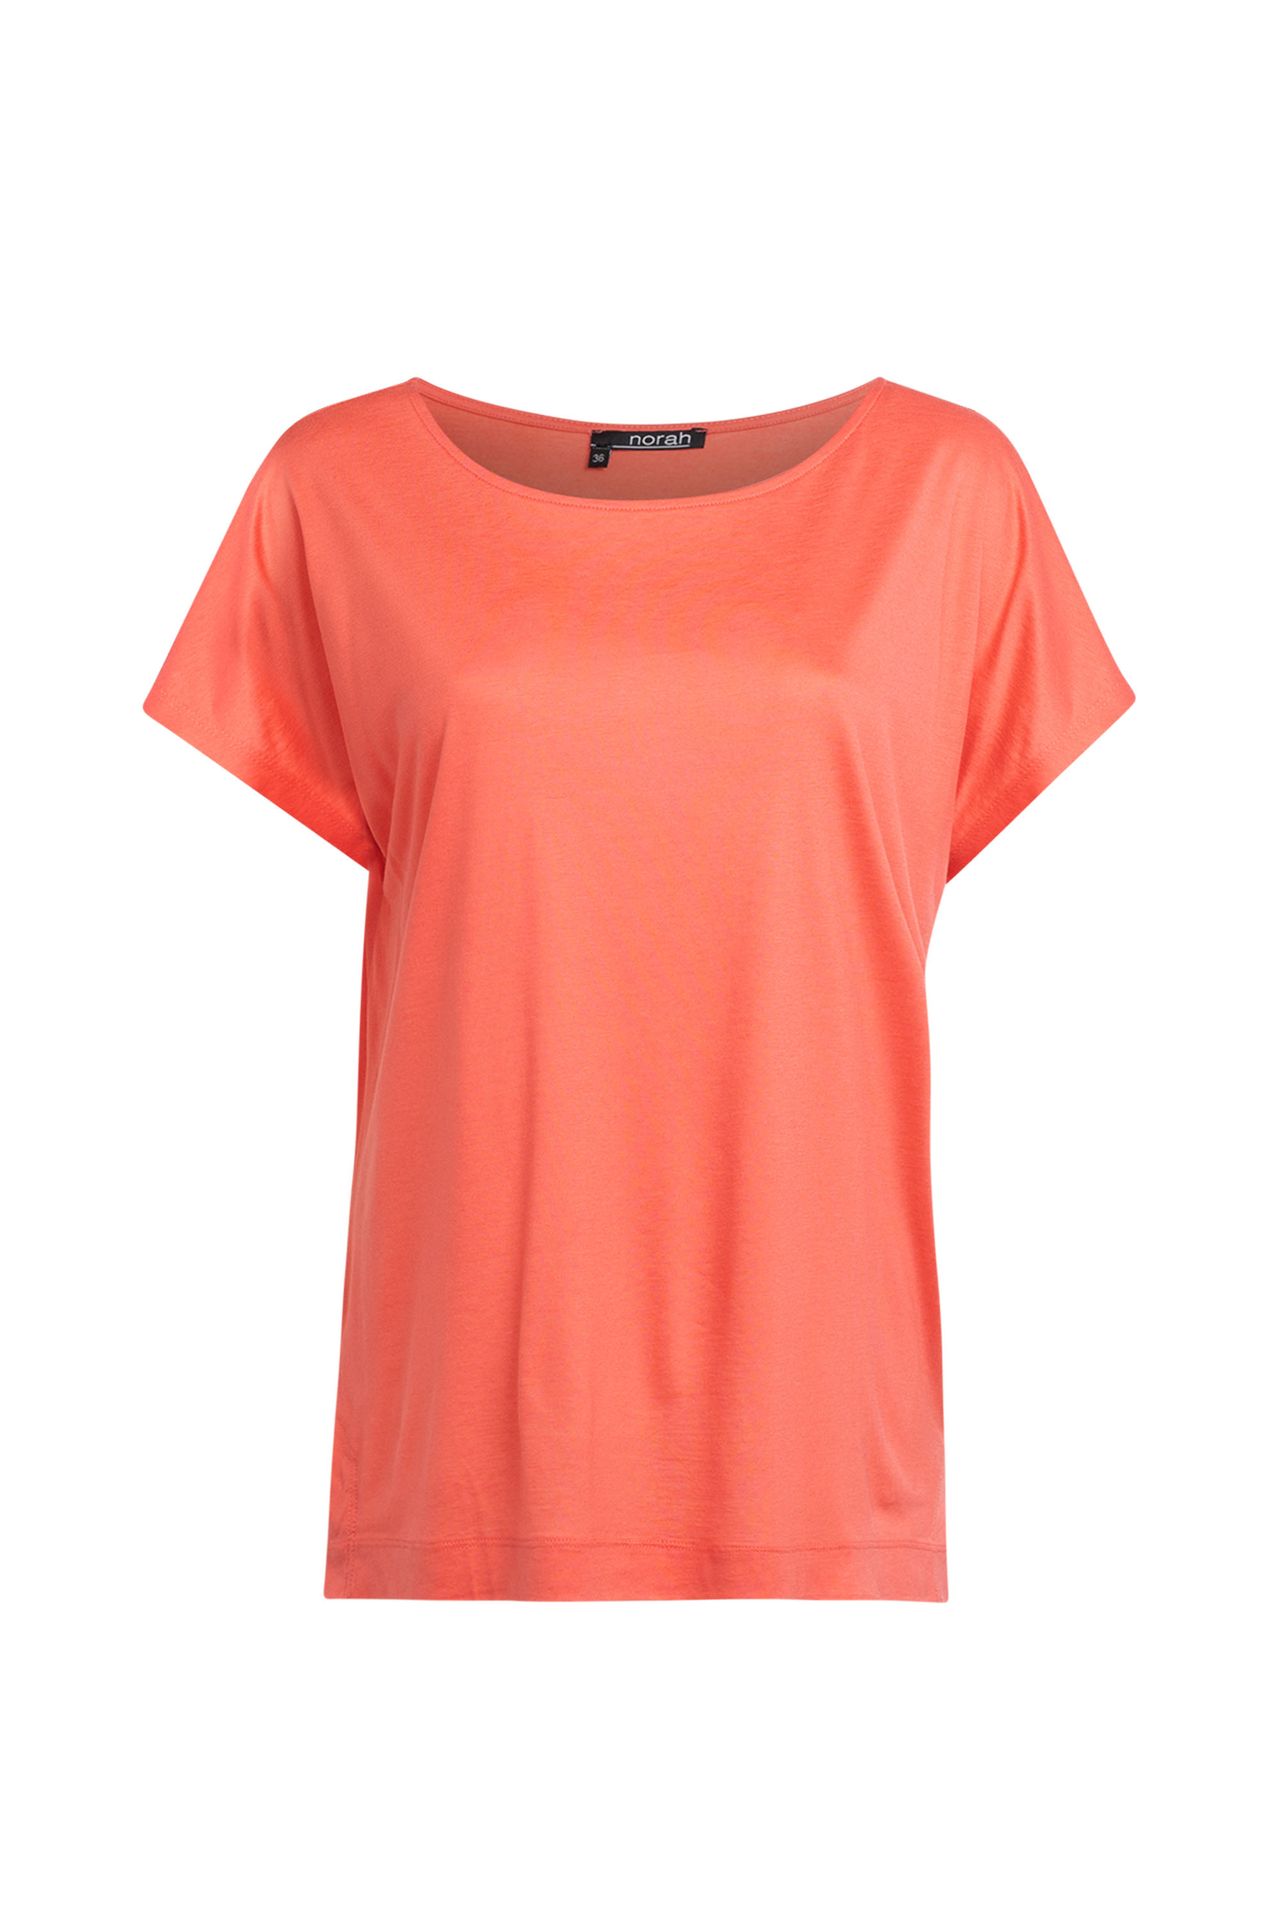 Norah Koraalkleurig shirt coral 209618-706